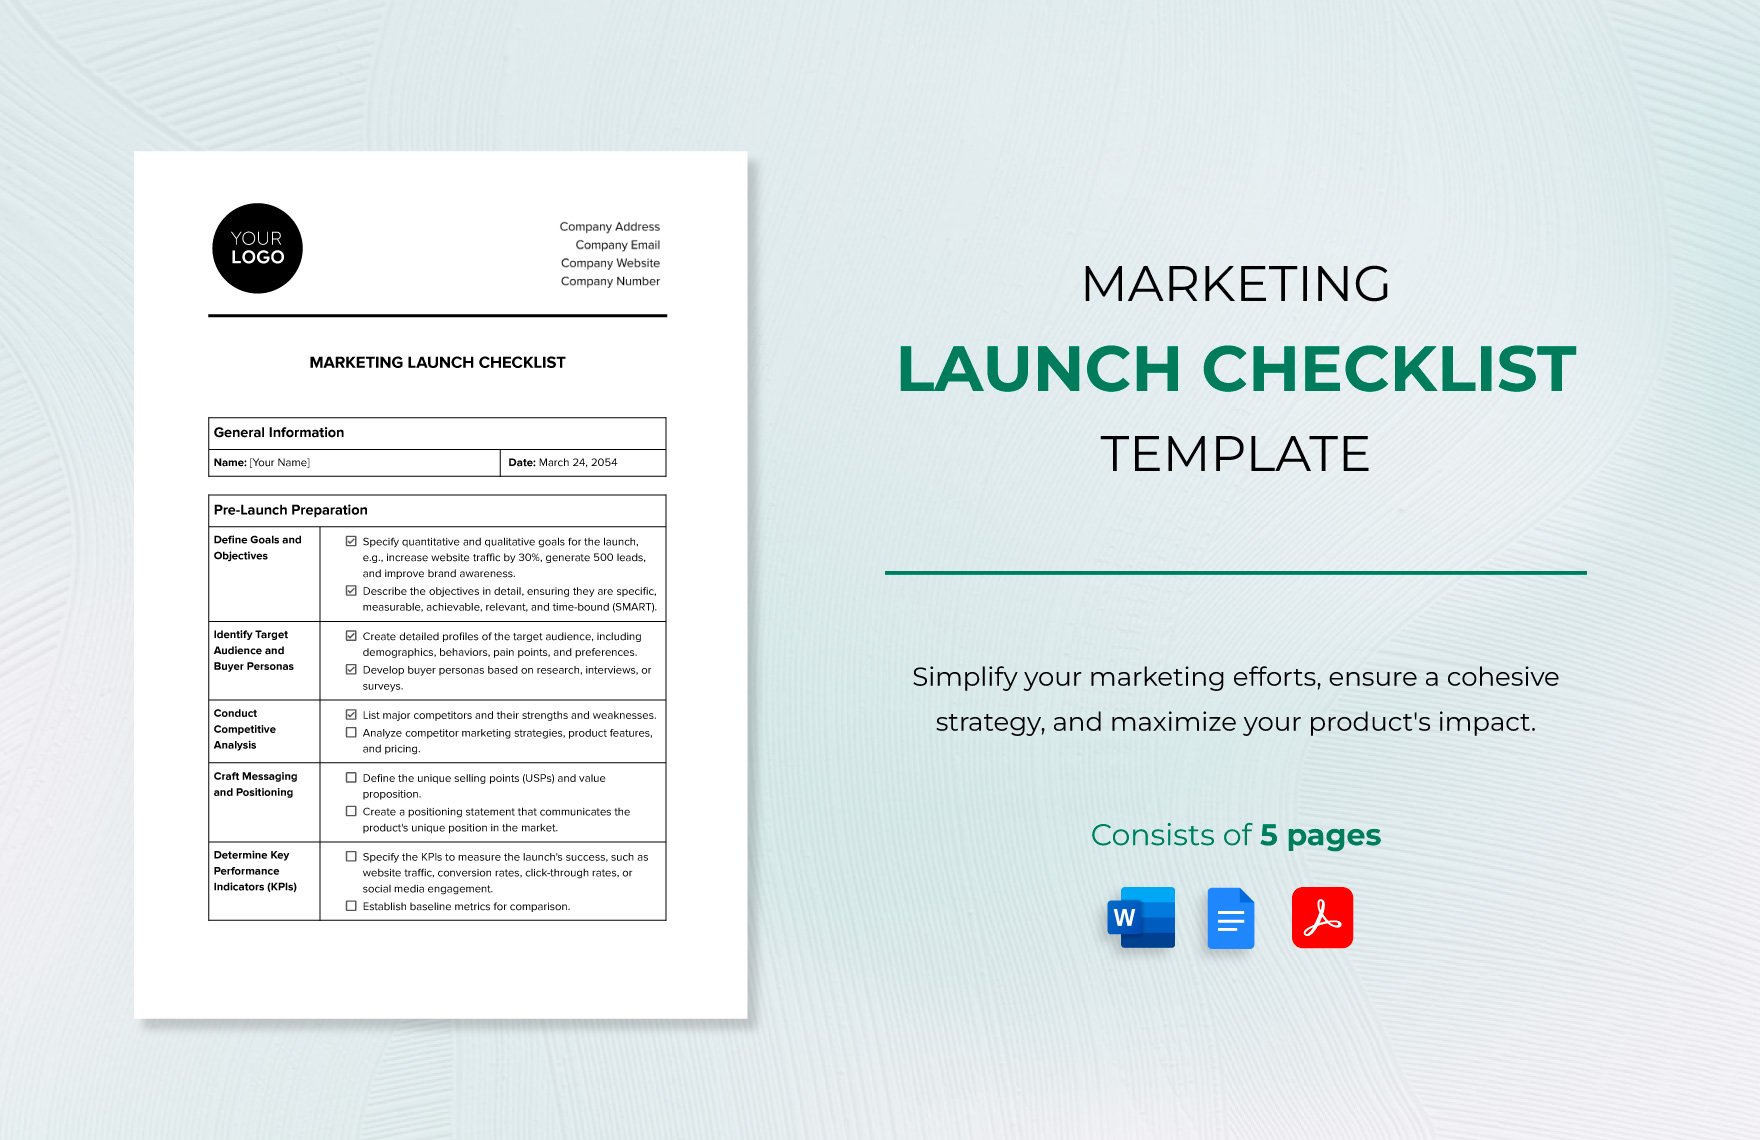 Marketing Launch Checklist Template in Word, Google Docs, PDF